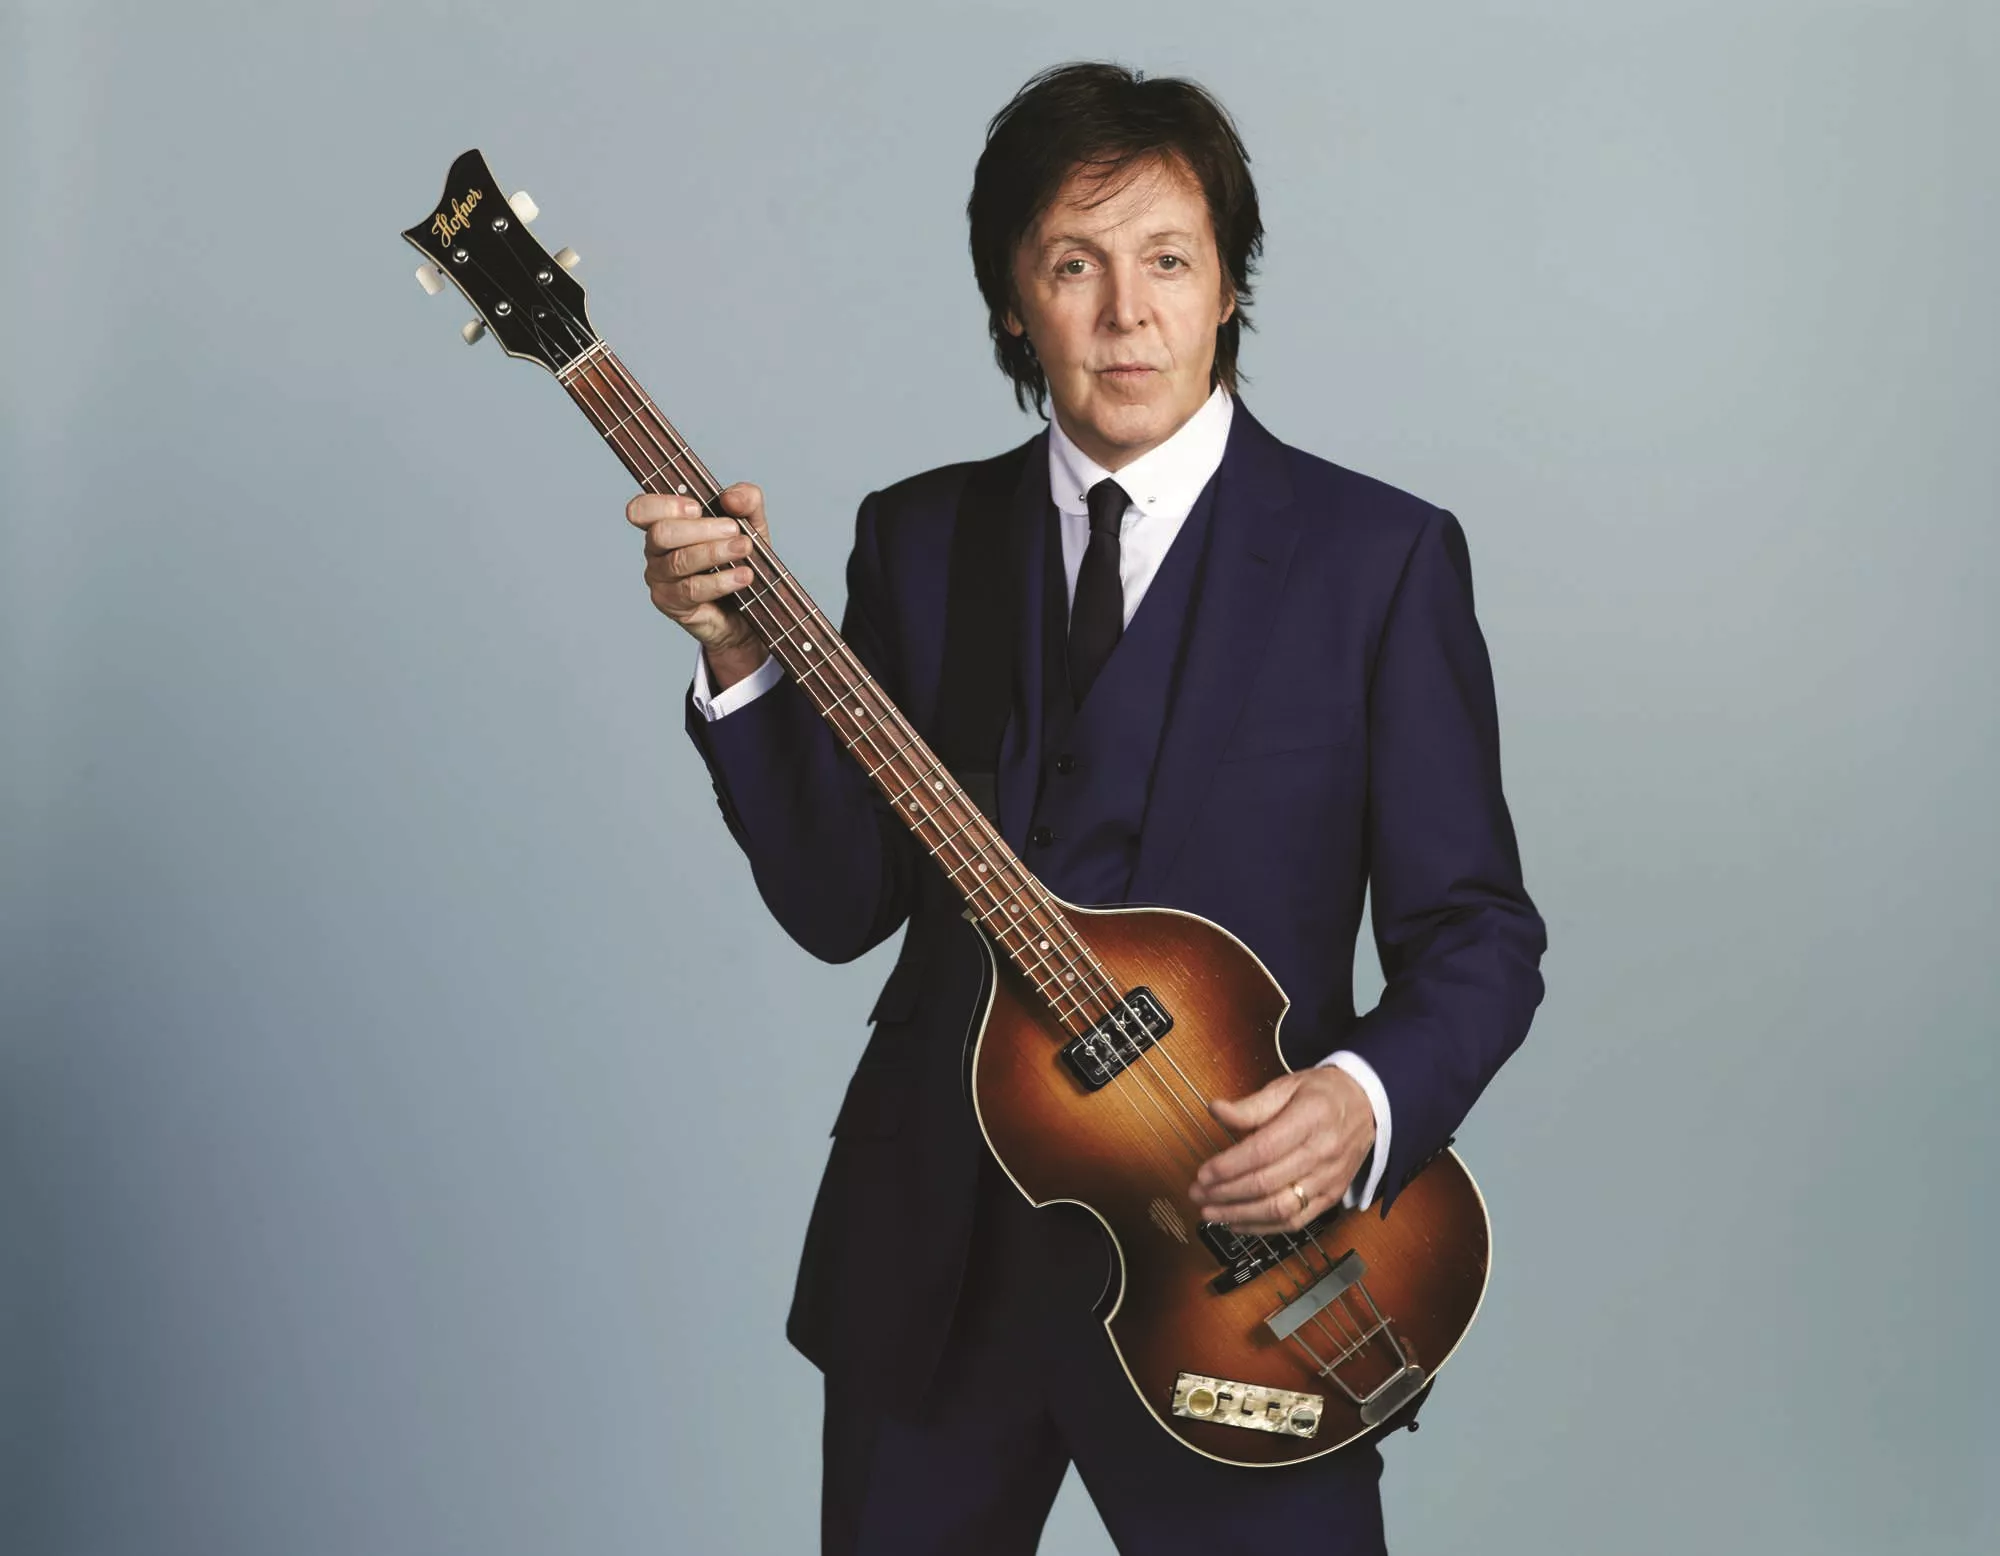 Paul McCartney spilte for 50 pubgjester i Liverpool